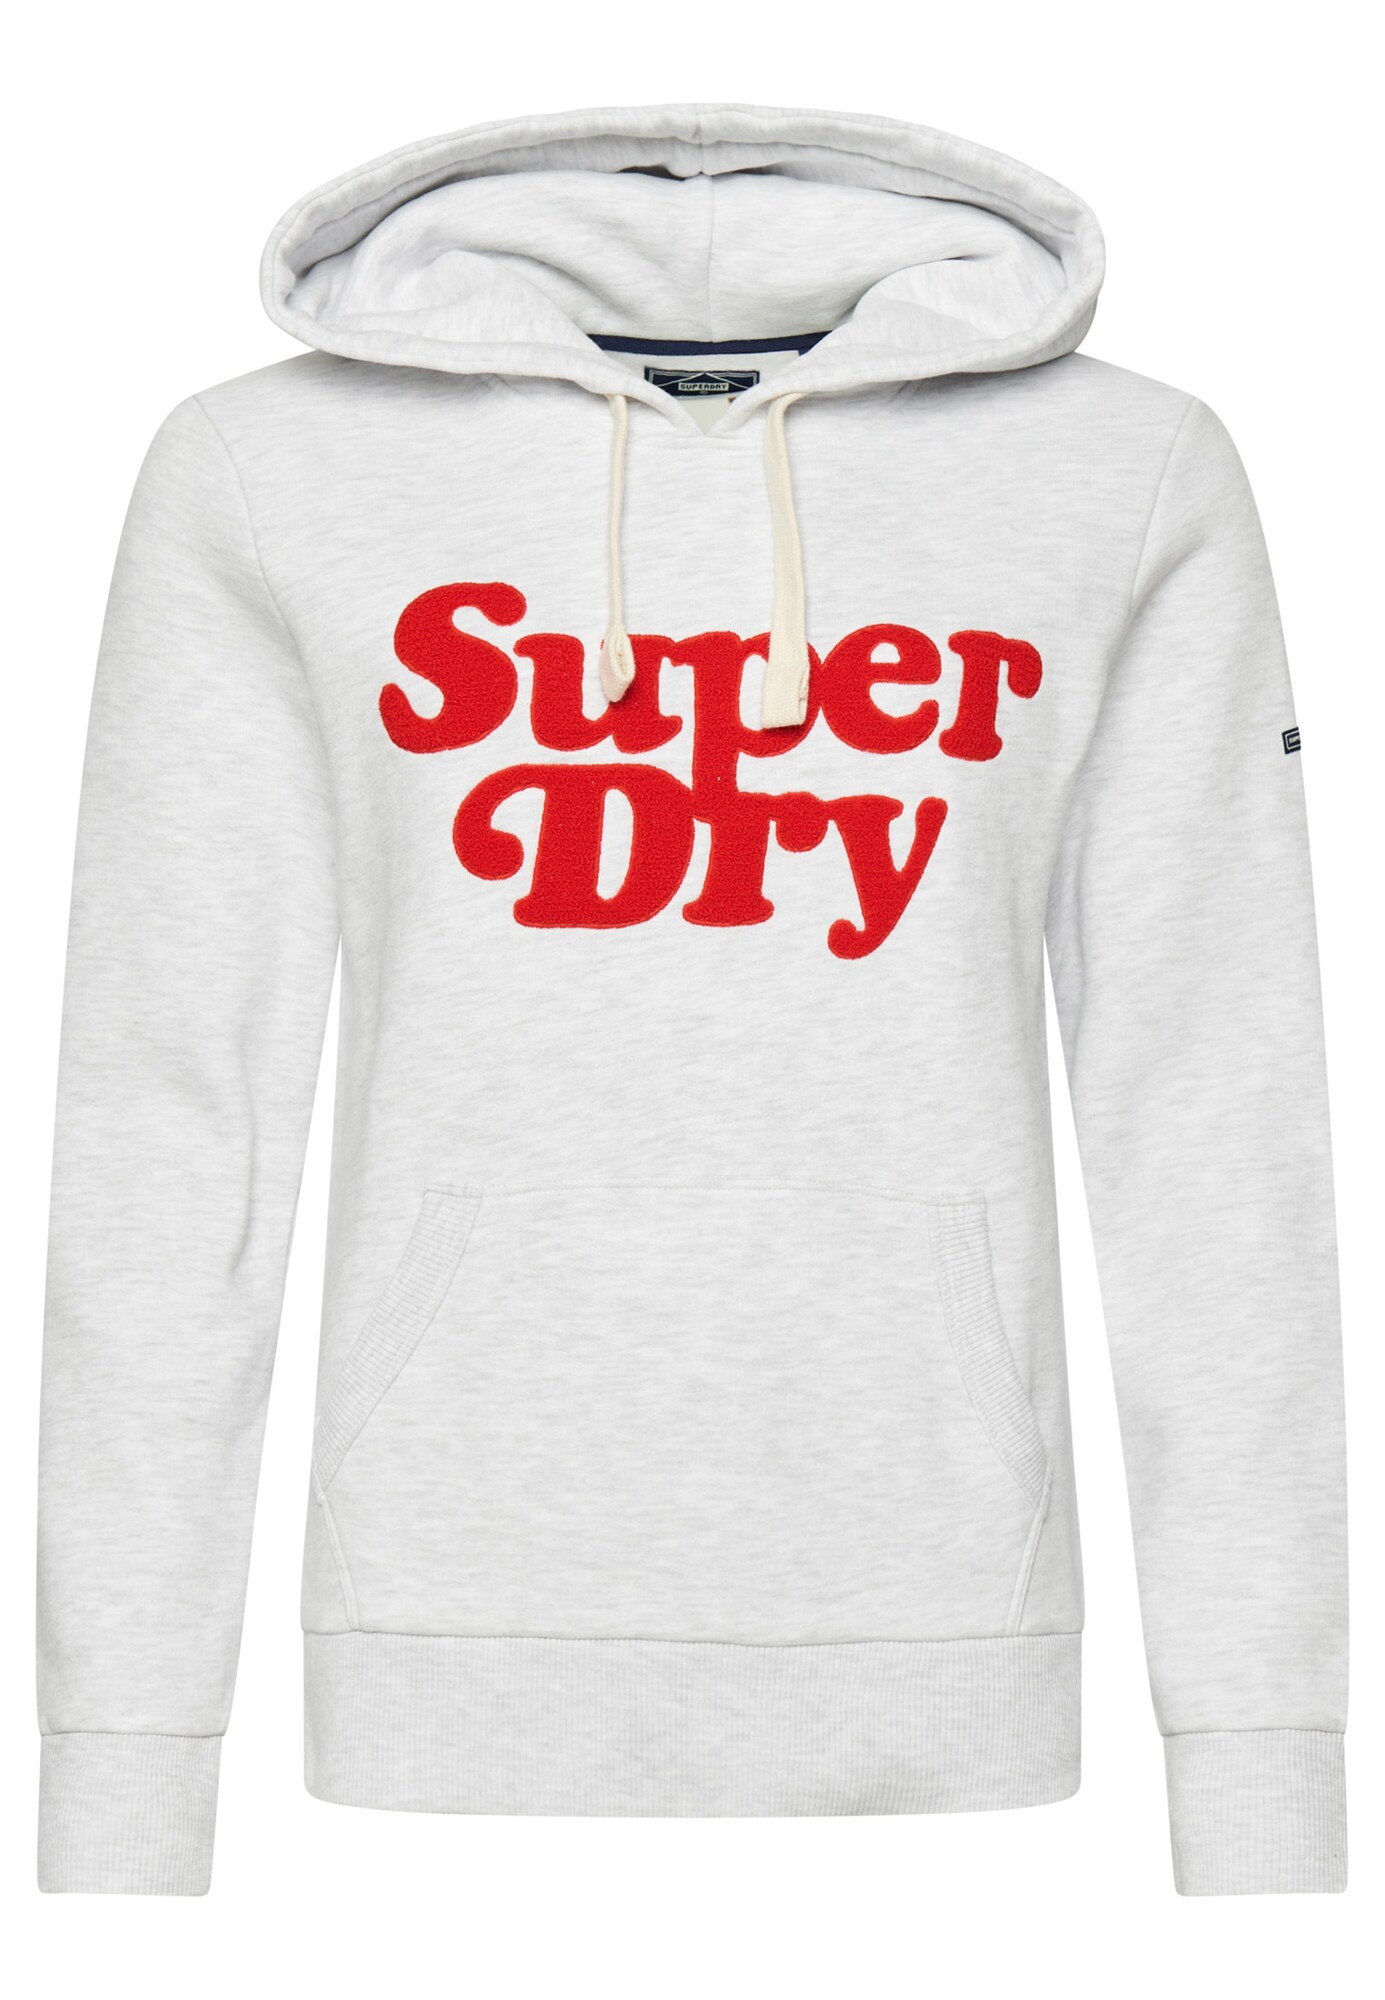 Superdry Sweatshirt graumeliert / rot